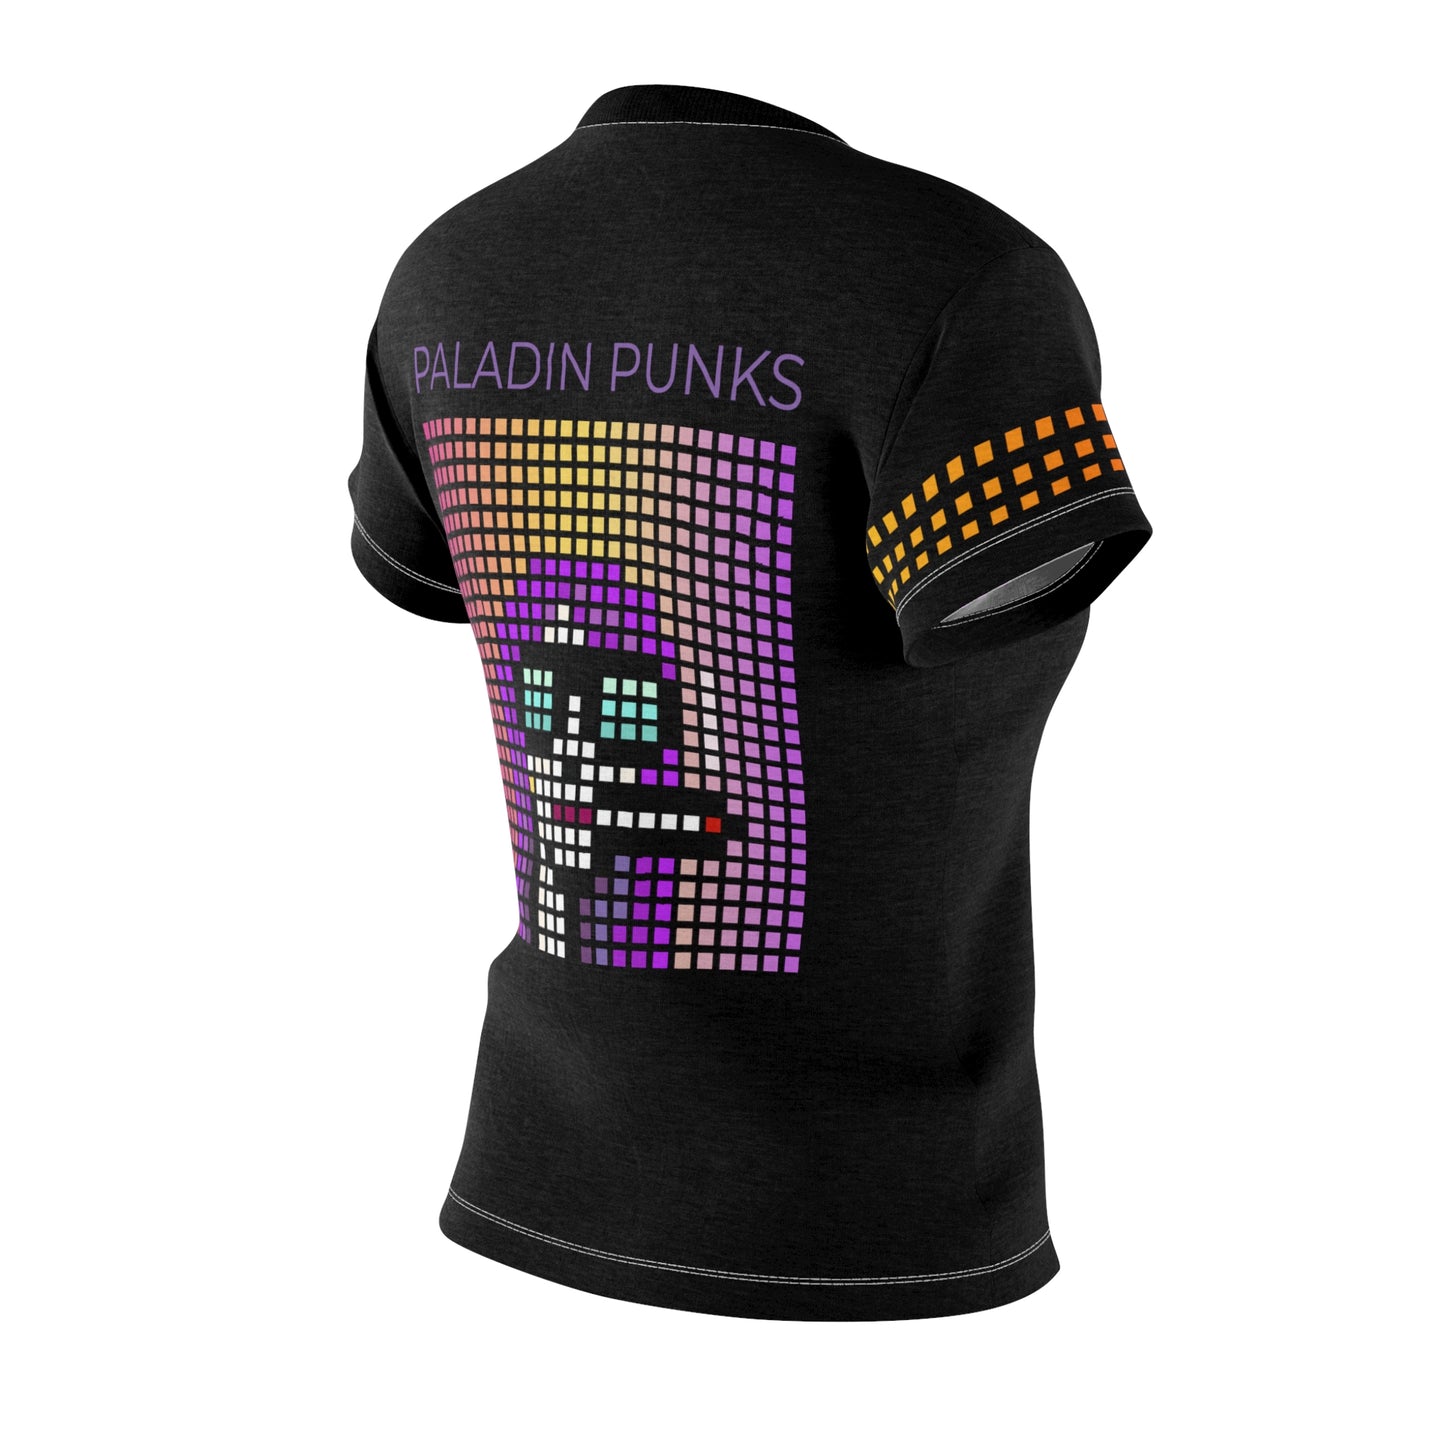 Paladin Punks Black T-shirt Short Sleeve Sublimation Dye